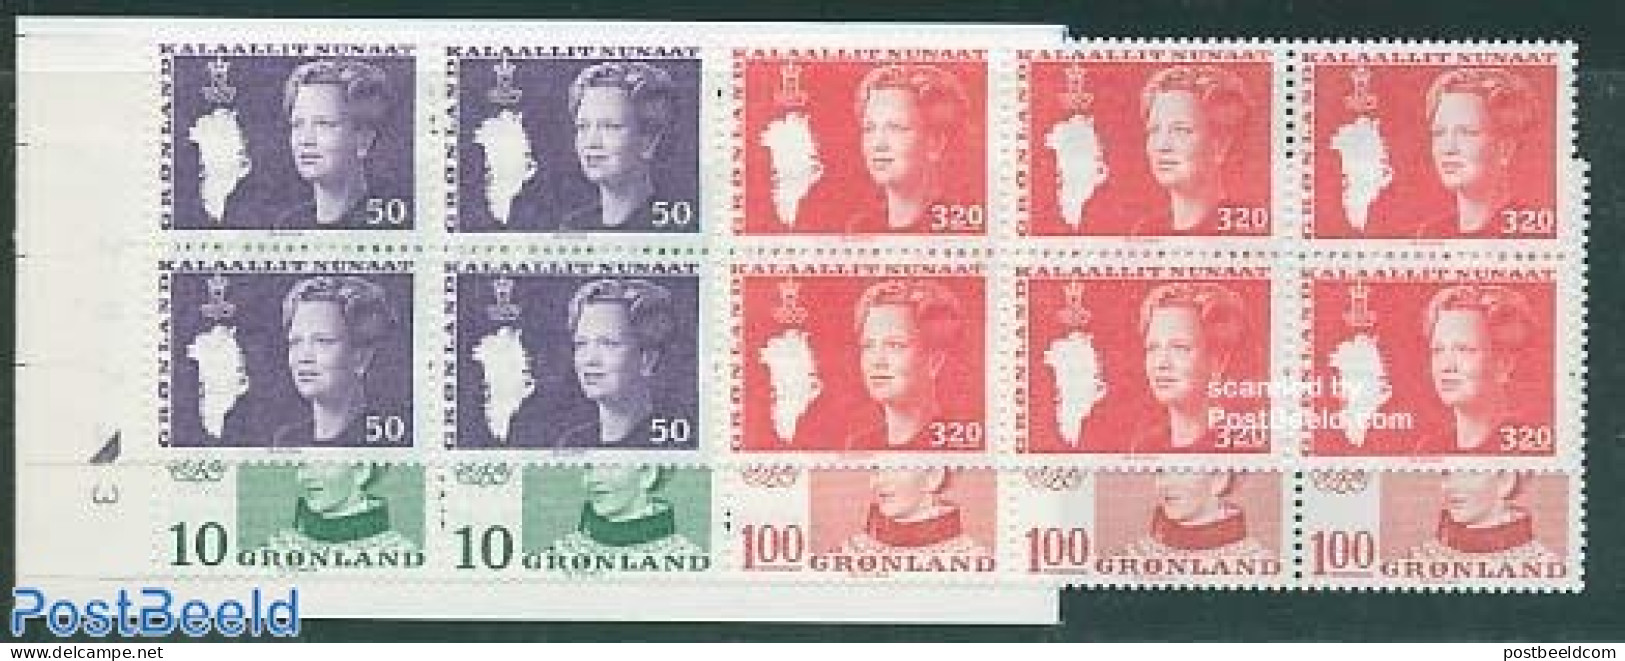 Greenland 1989 Definitives Booklet, Mint NH, Stamp Booklets - Ongebruikt